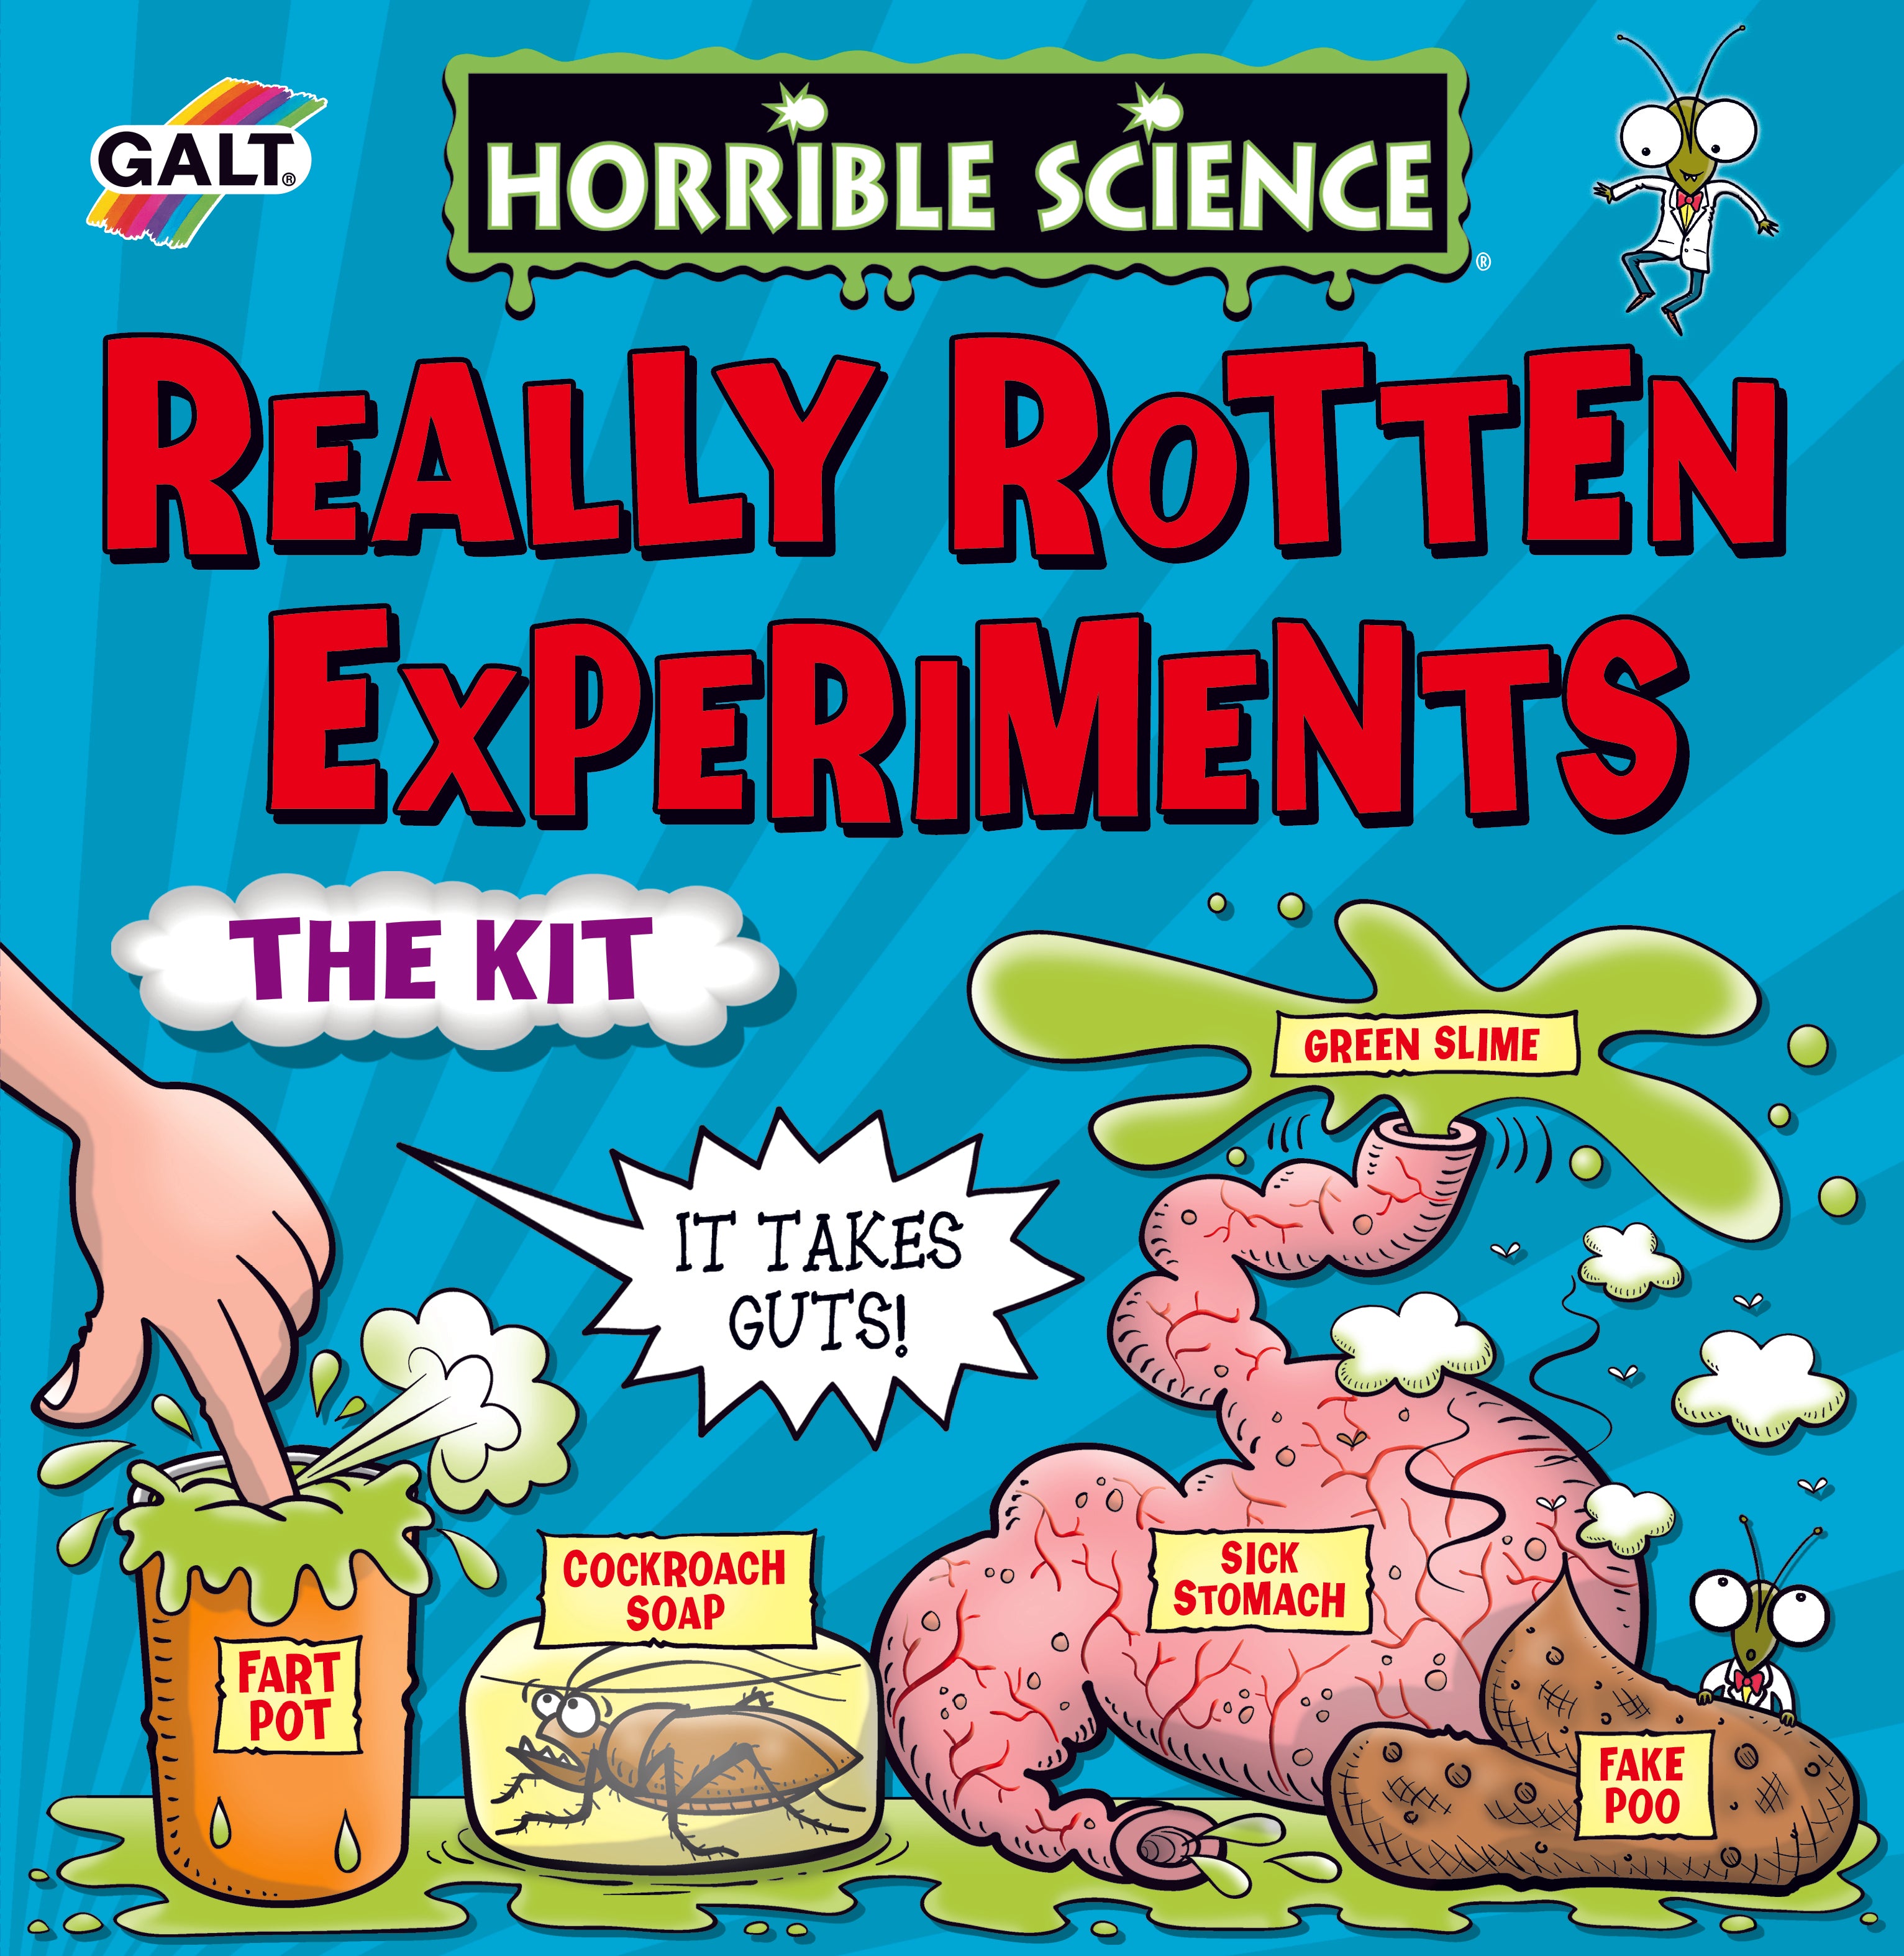 Galt - Really Rotten Experiments